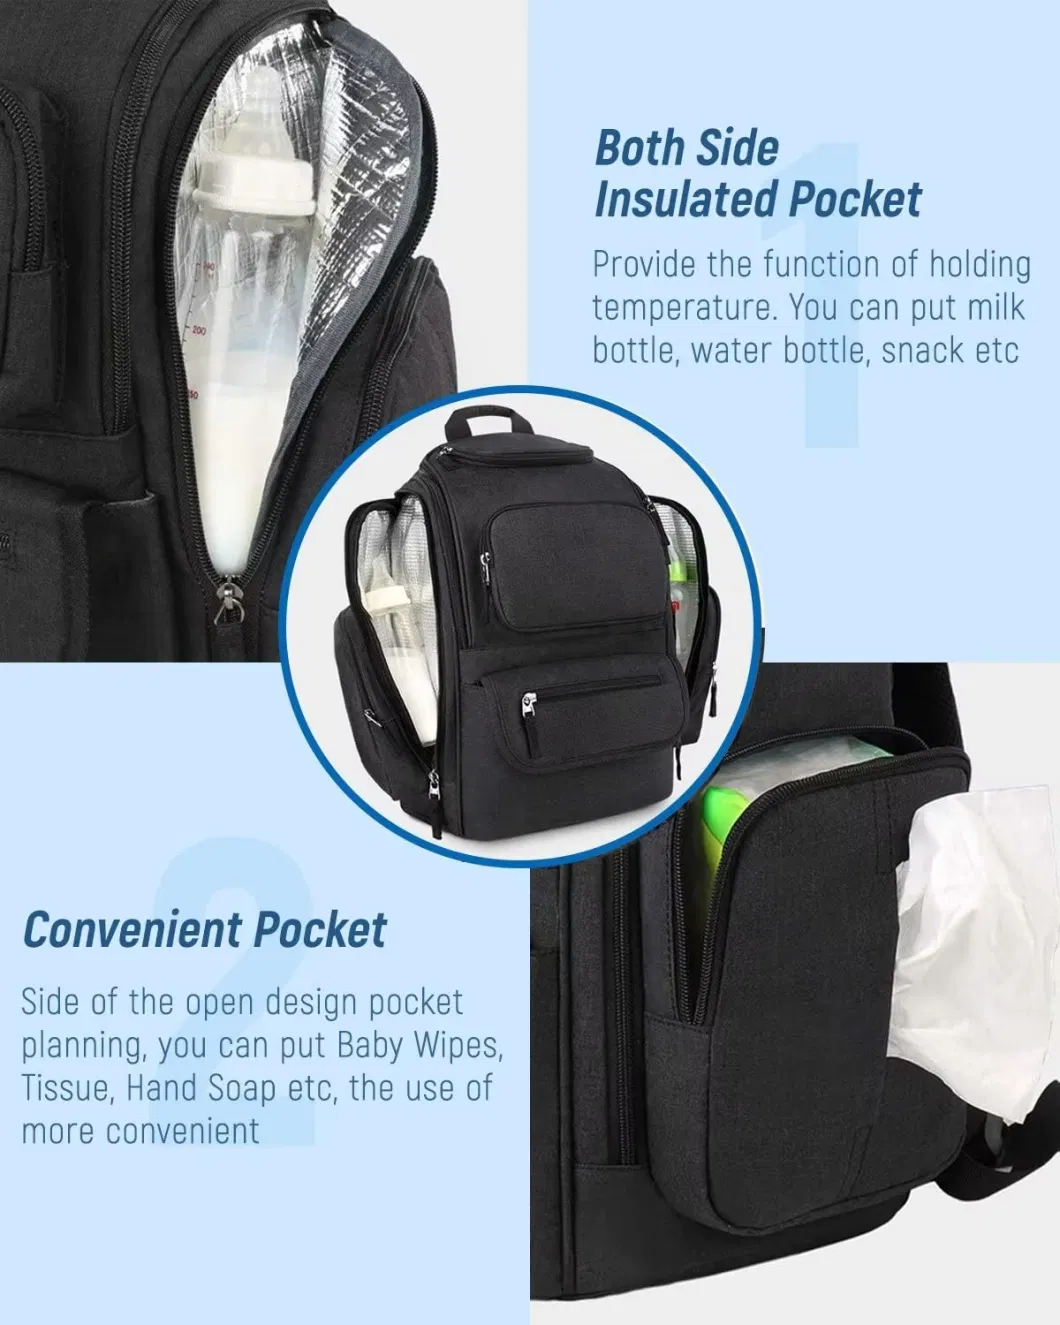 Water Resistant Men Women Water Resistant Baby Travel Diaper Backpack with Stroller Straps